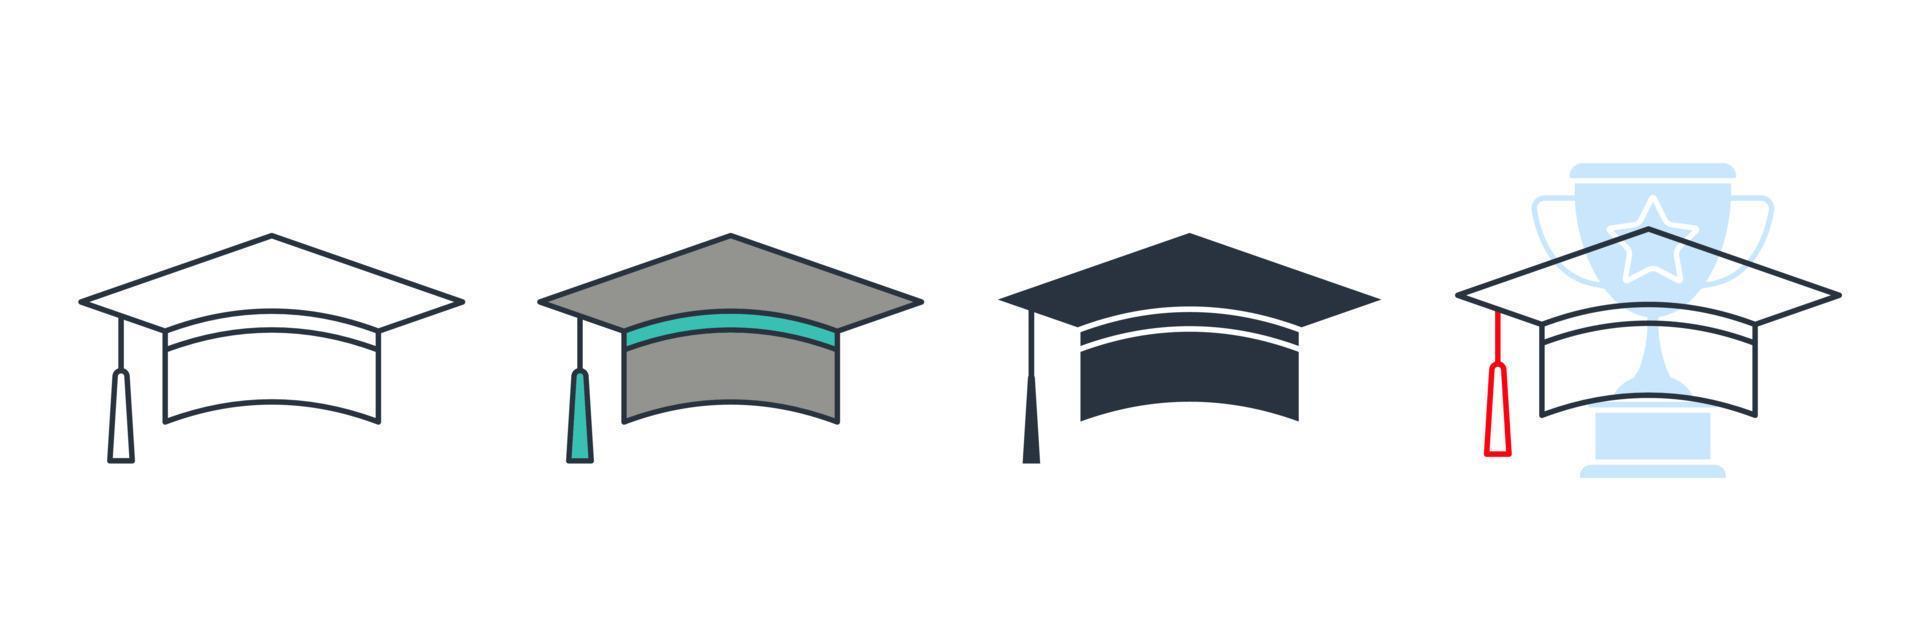 graduation cap icon logo vector illustration. Square academic cap symbol template for graphic and web design collection